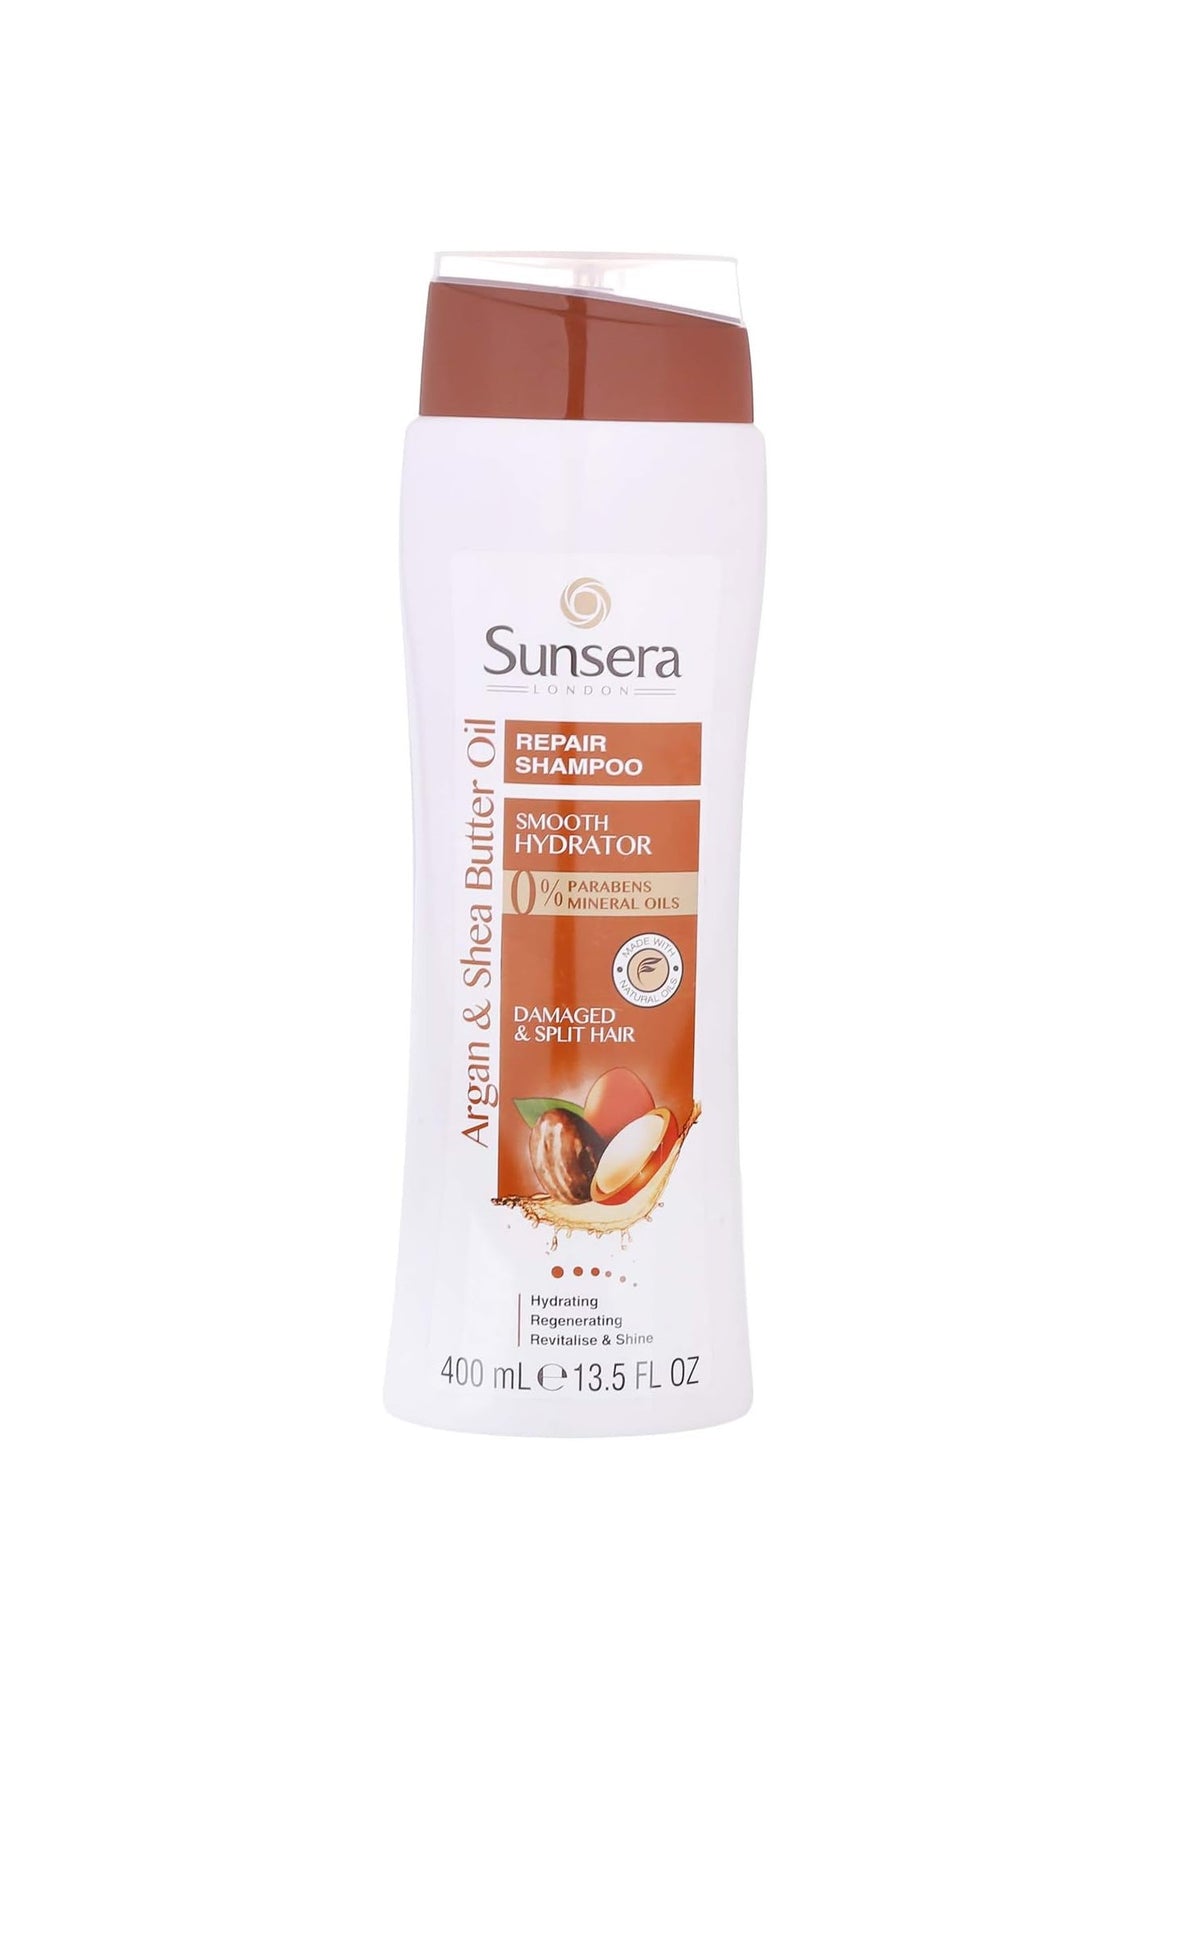 Sunsera Repair Shampoo with Argan & Shea Butter Oil - 400ml